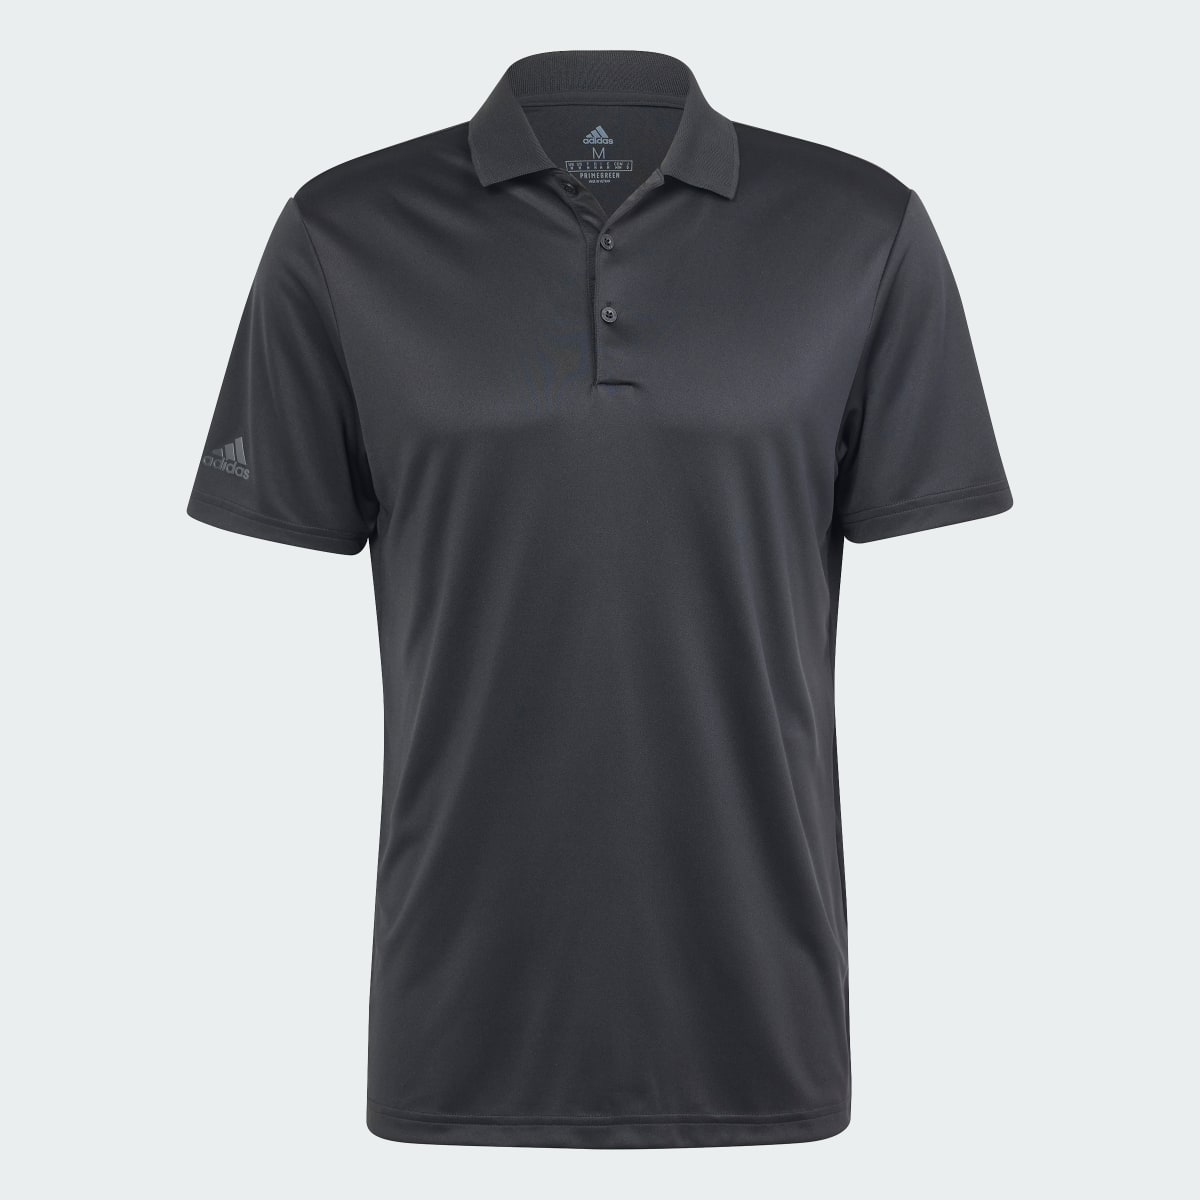 Adidas Performance Primegreen Golf Polo Shirt. 6